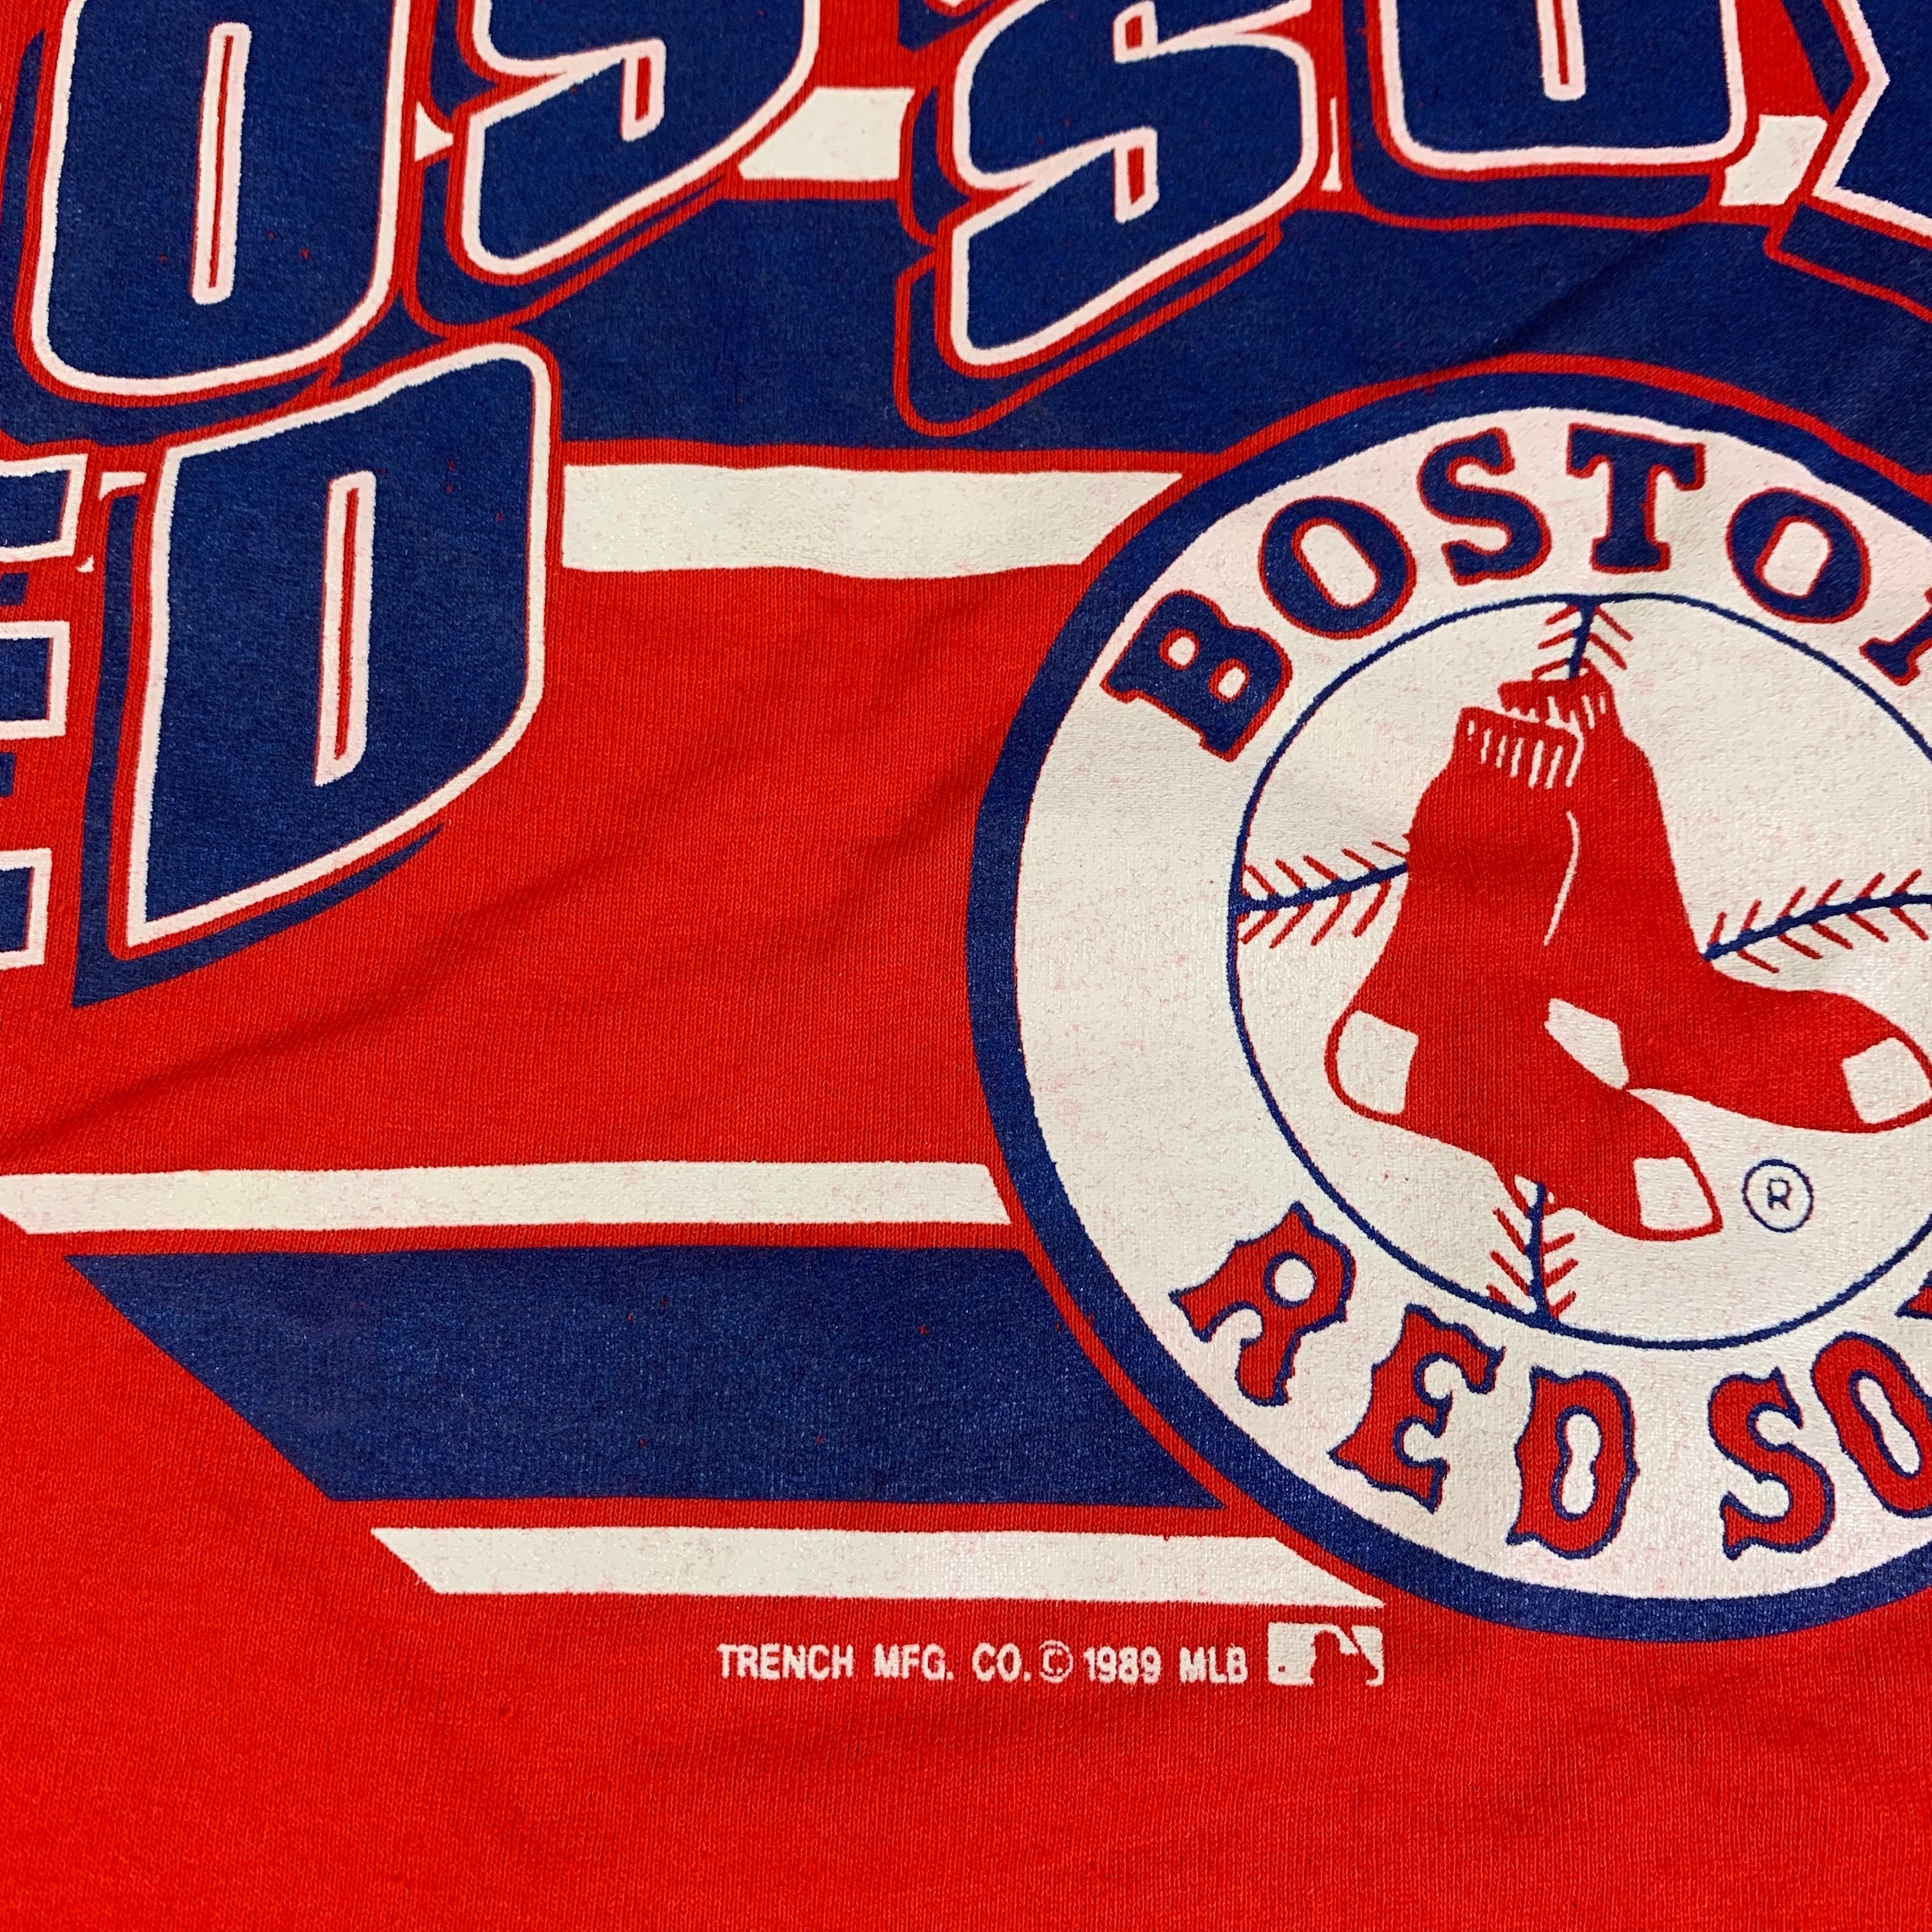 1938 Boston Red Sox Artwork: Men's Retro Heather T-Shirt